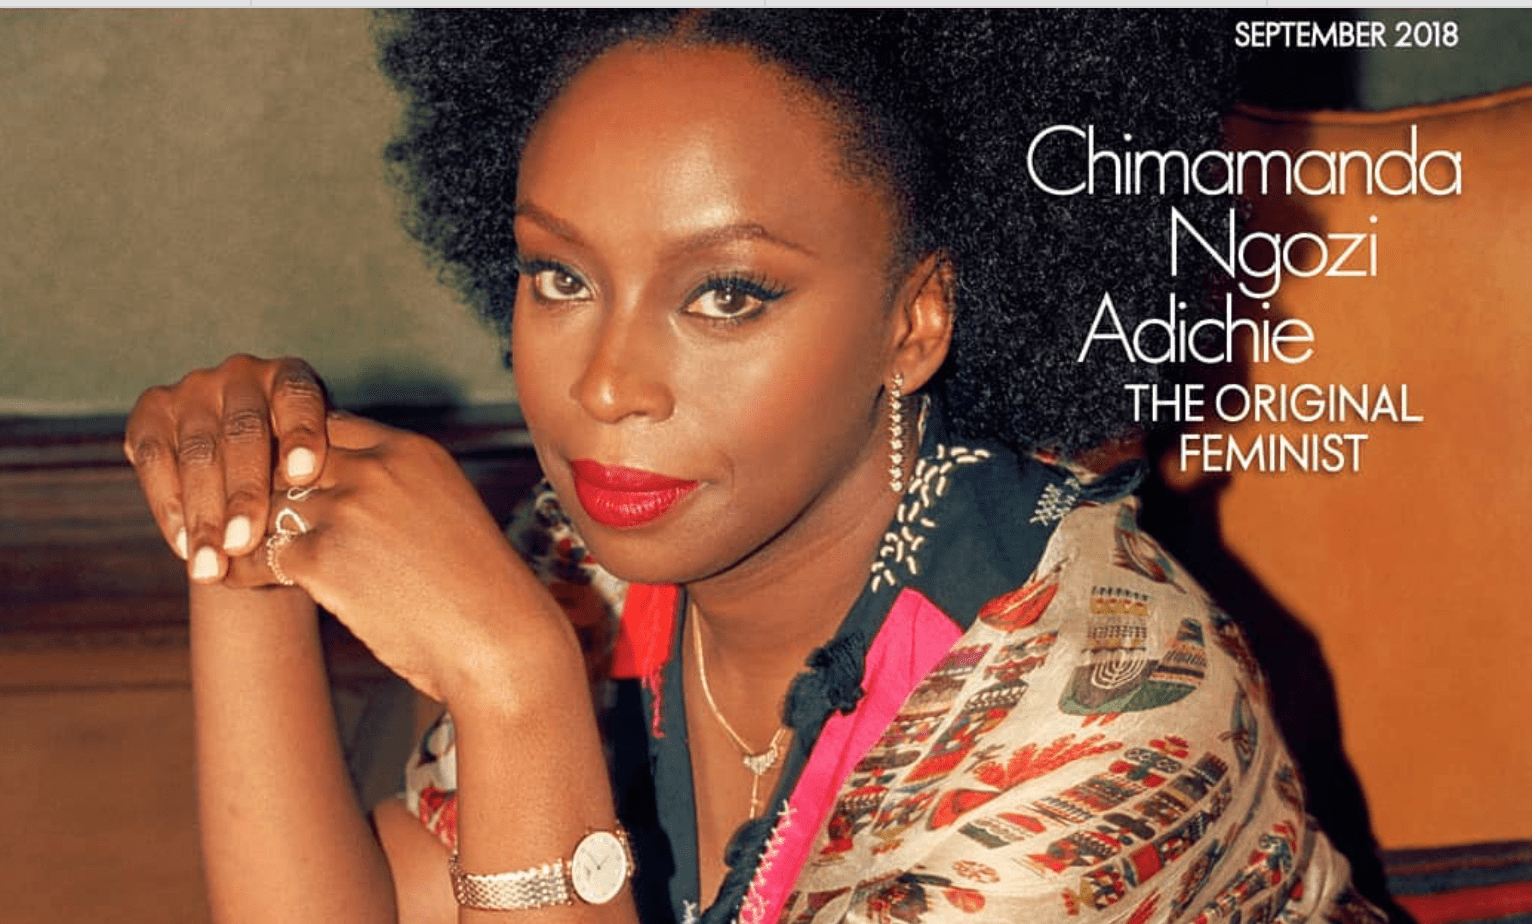 Chimamanda Ngozi Adichie Covers Elle India’s September Issue “The Original Feminist”